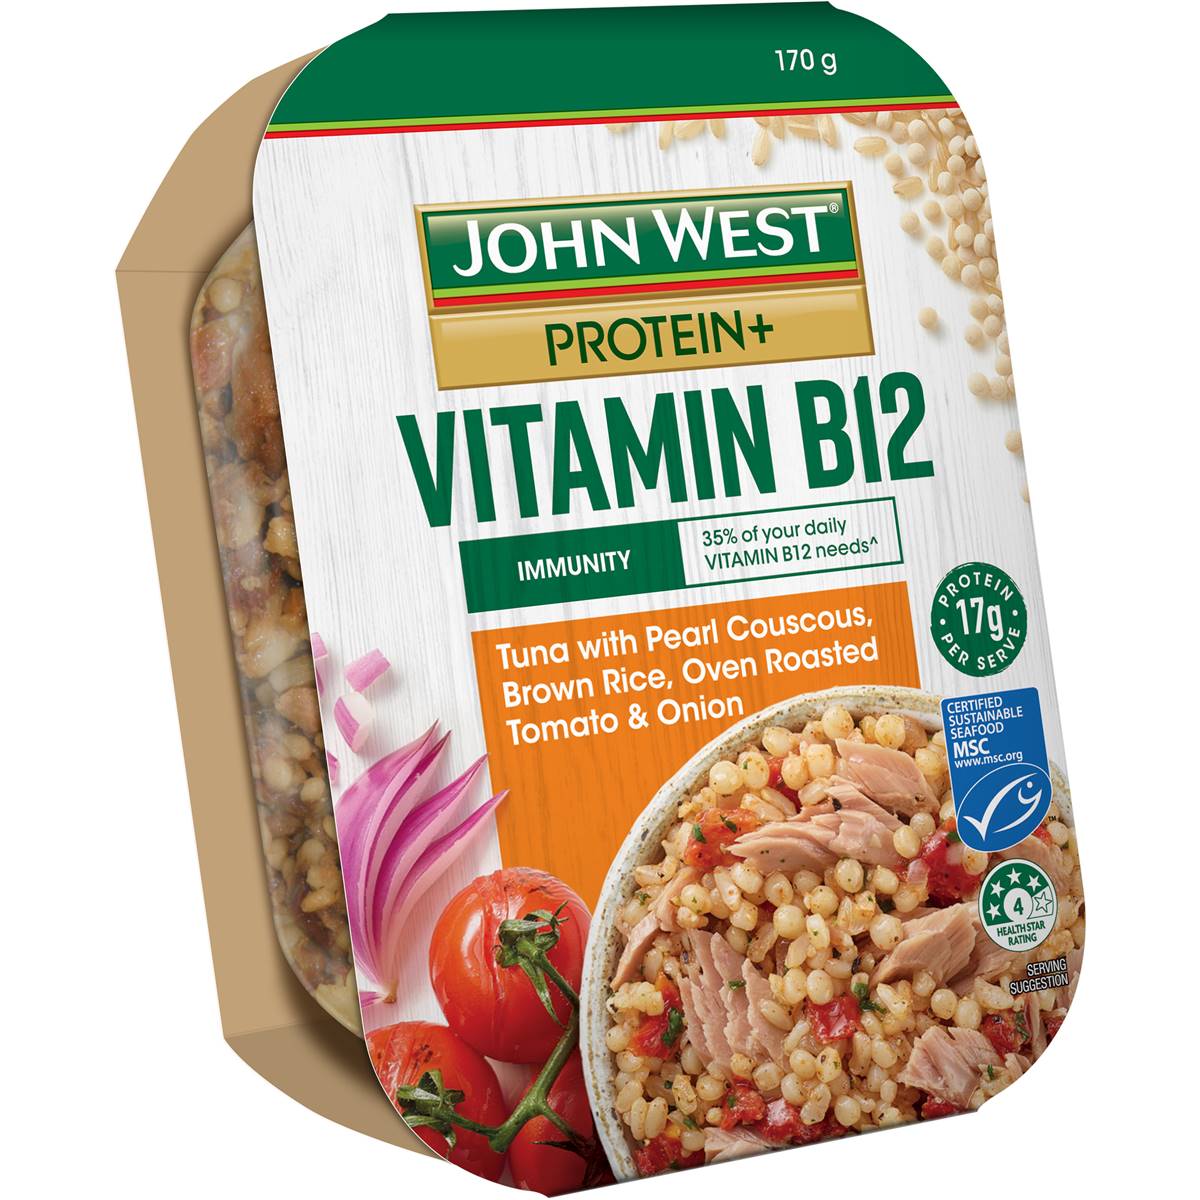 John West Protein+ Vitamin B12 Tuna Bowl Couscous Brown Rice Onion 170g